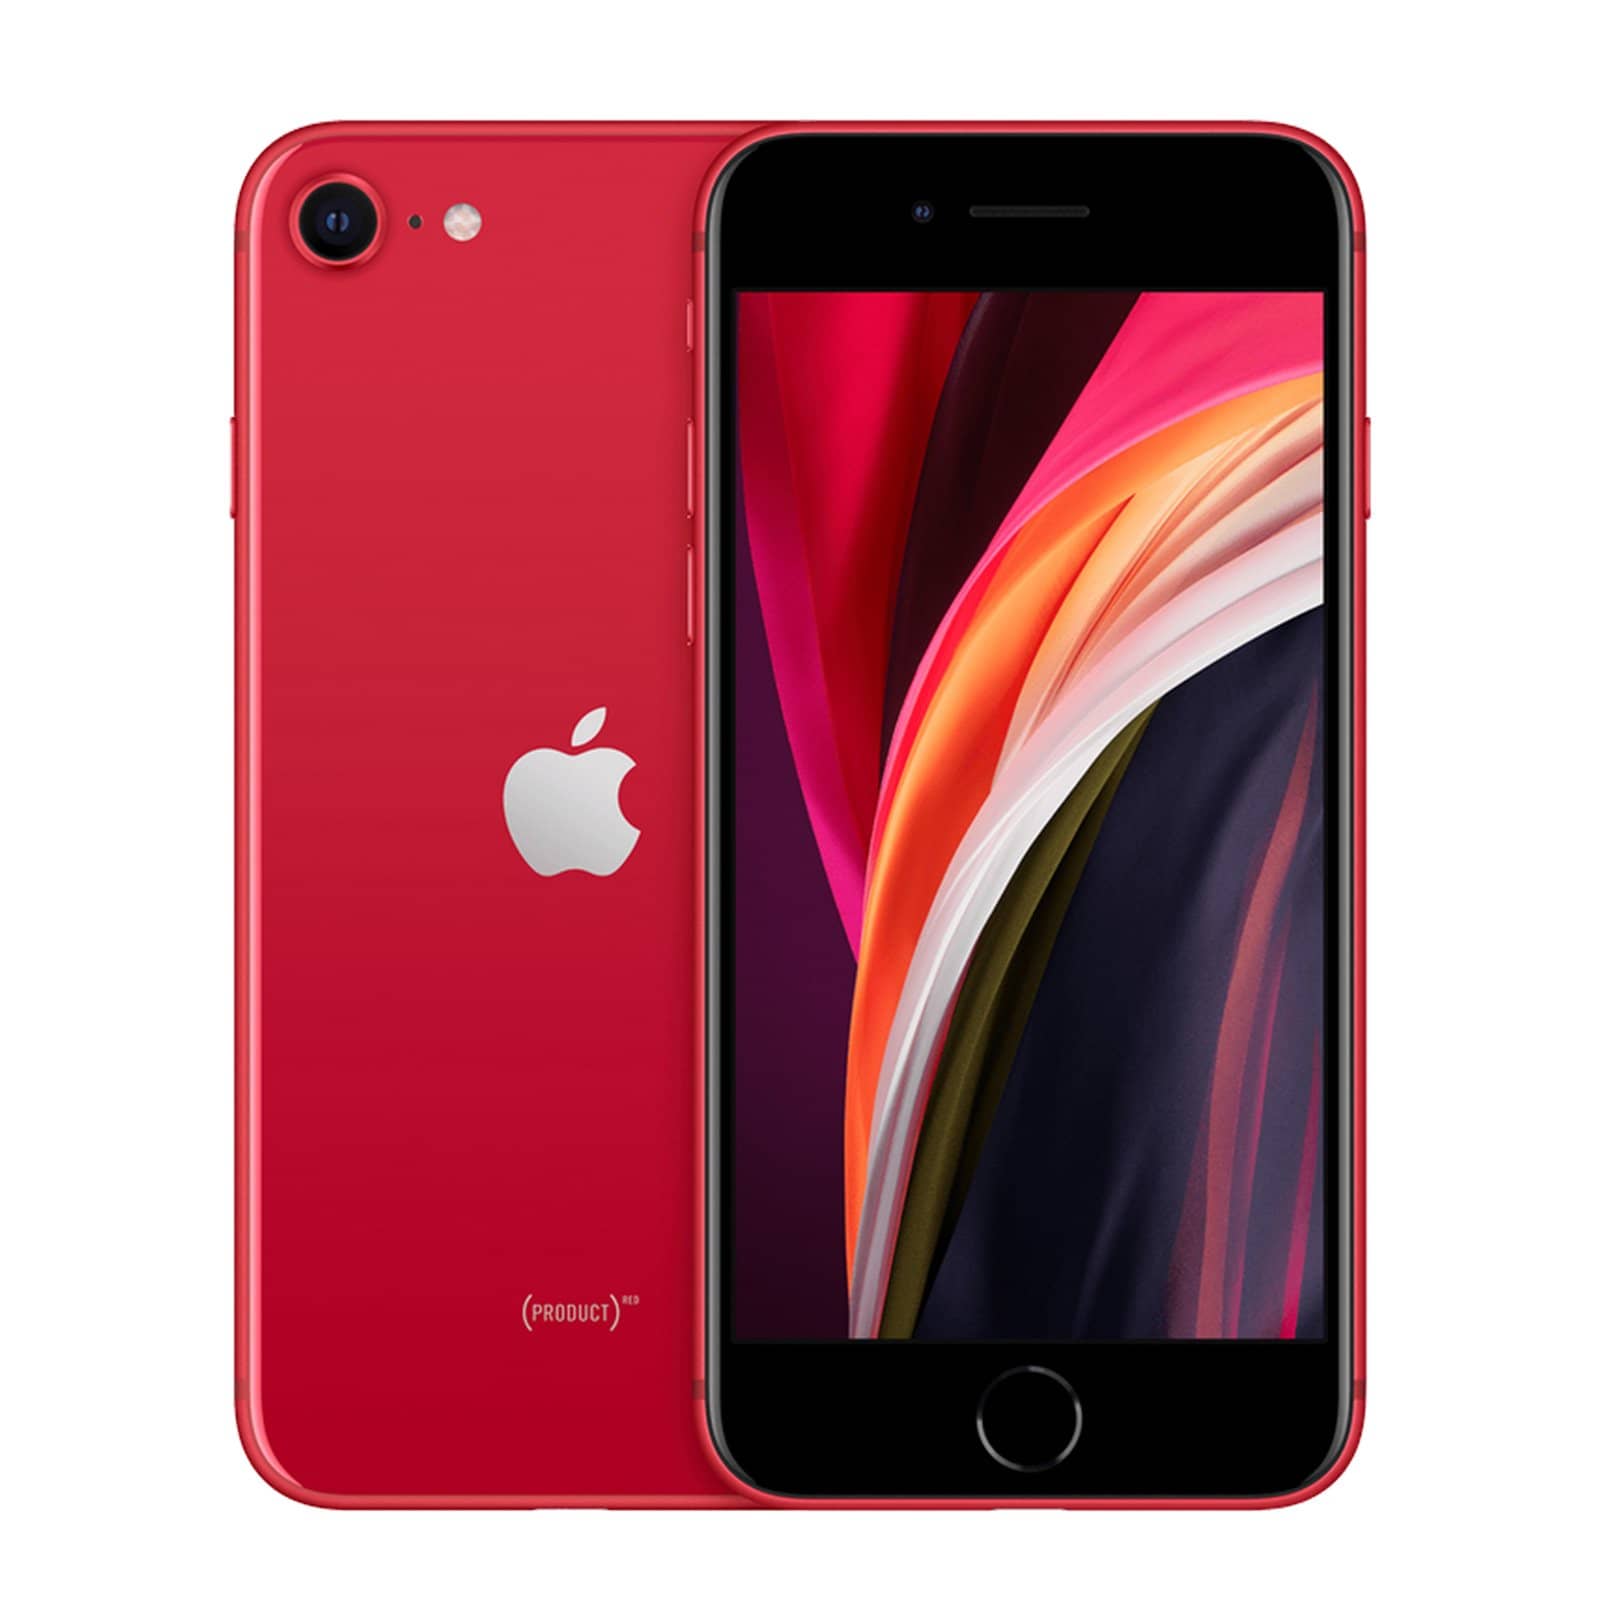 Apple iPhone SE 2nd Gen 128GB Red Pristine Unlocked 128GB Product Red Pristine